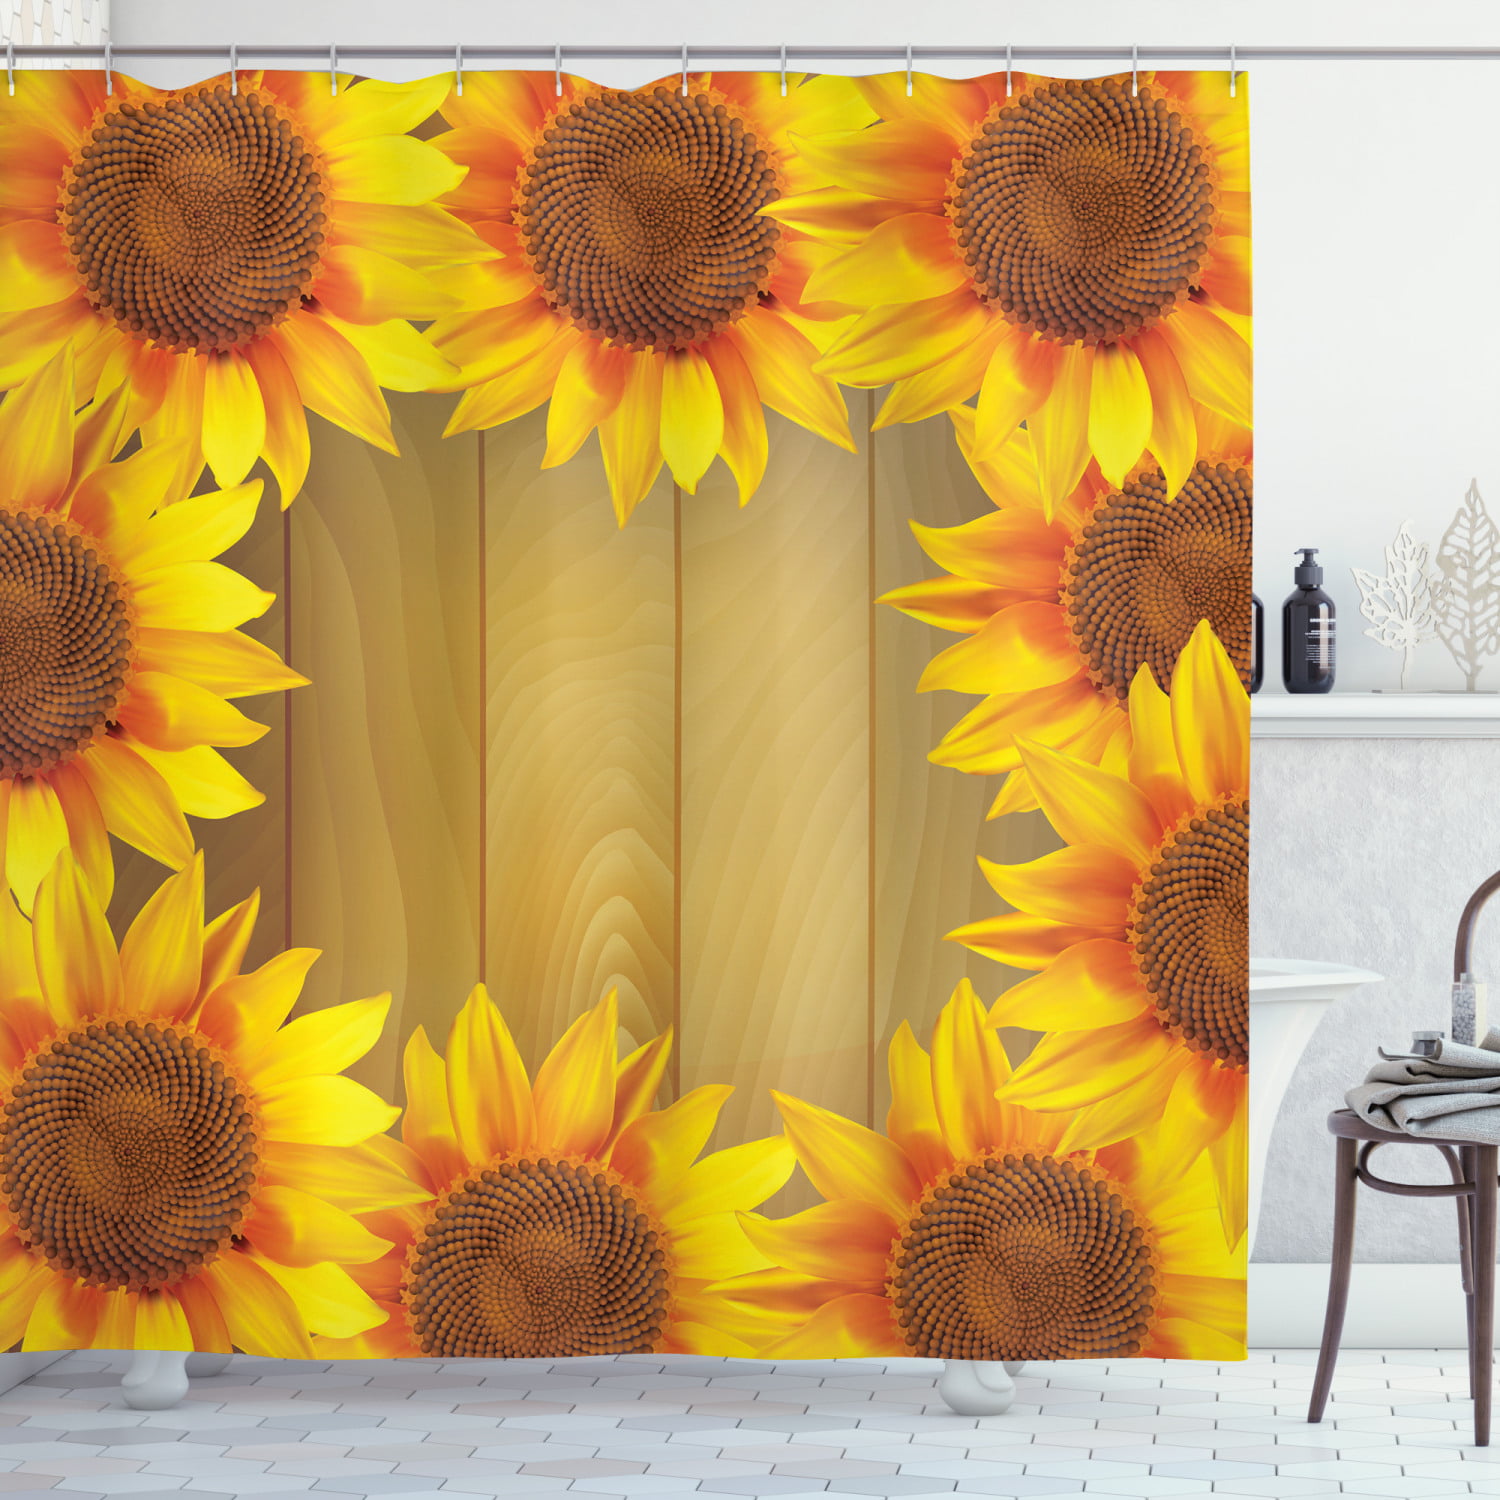 Details about   Spring Sunflower String Lights Wood Planks Shower Curtain Set Bathroom Decor 72" 